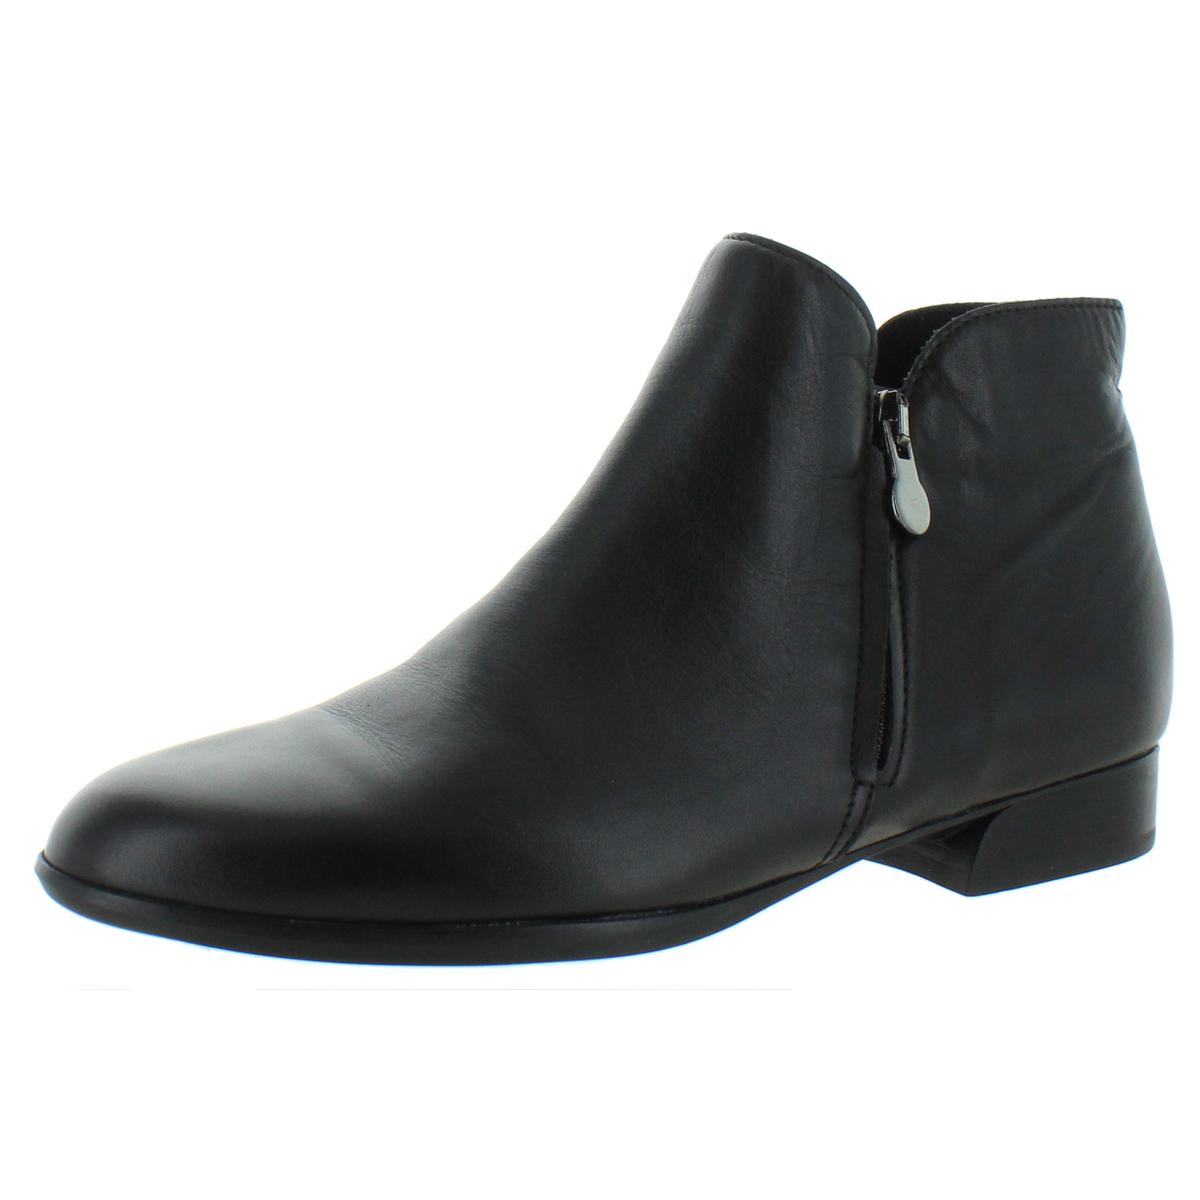 Munro Womens Averee Black Leather Ankle Boots Shoes 8 Medium (B,M) BHFO ...